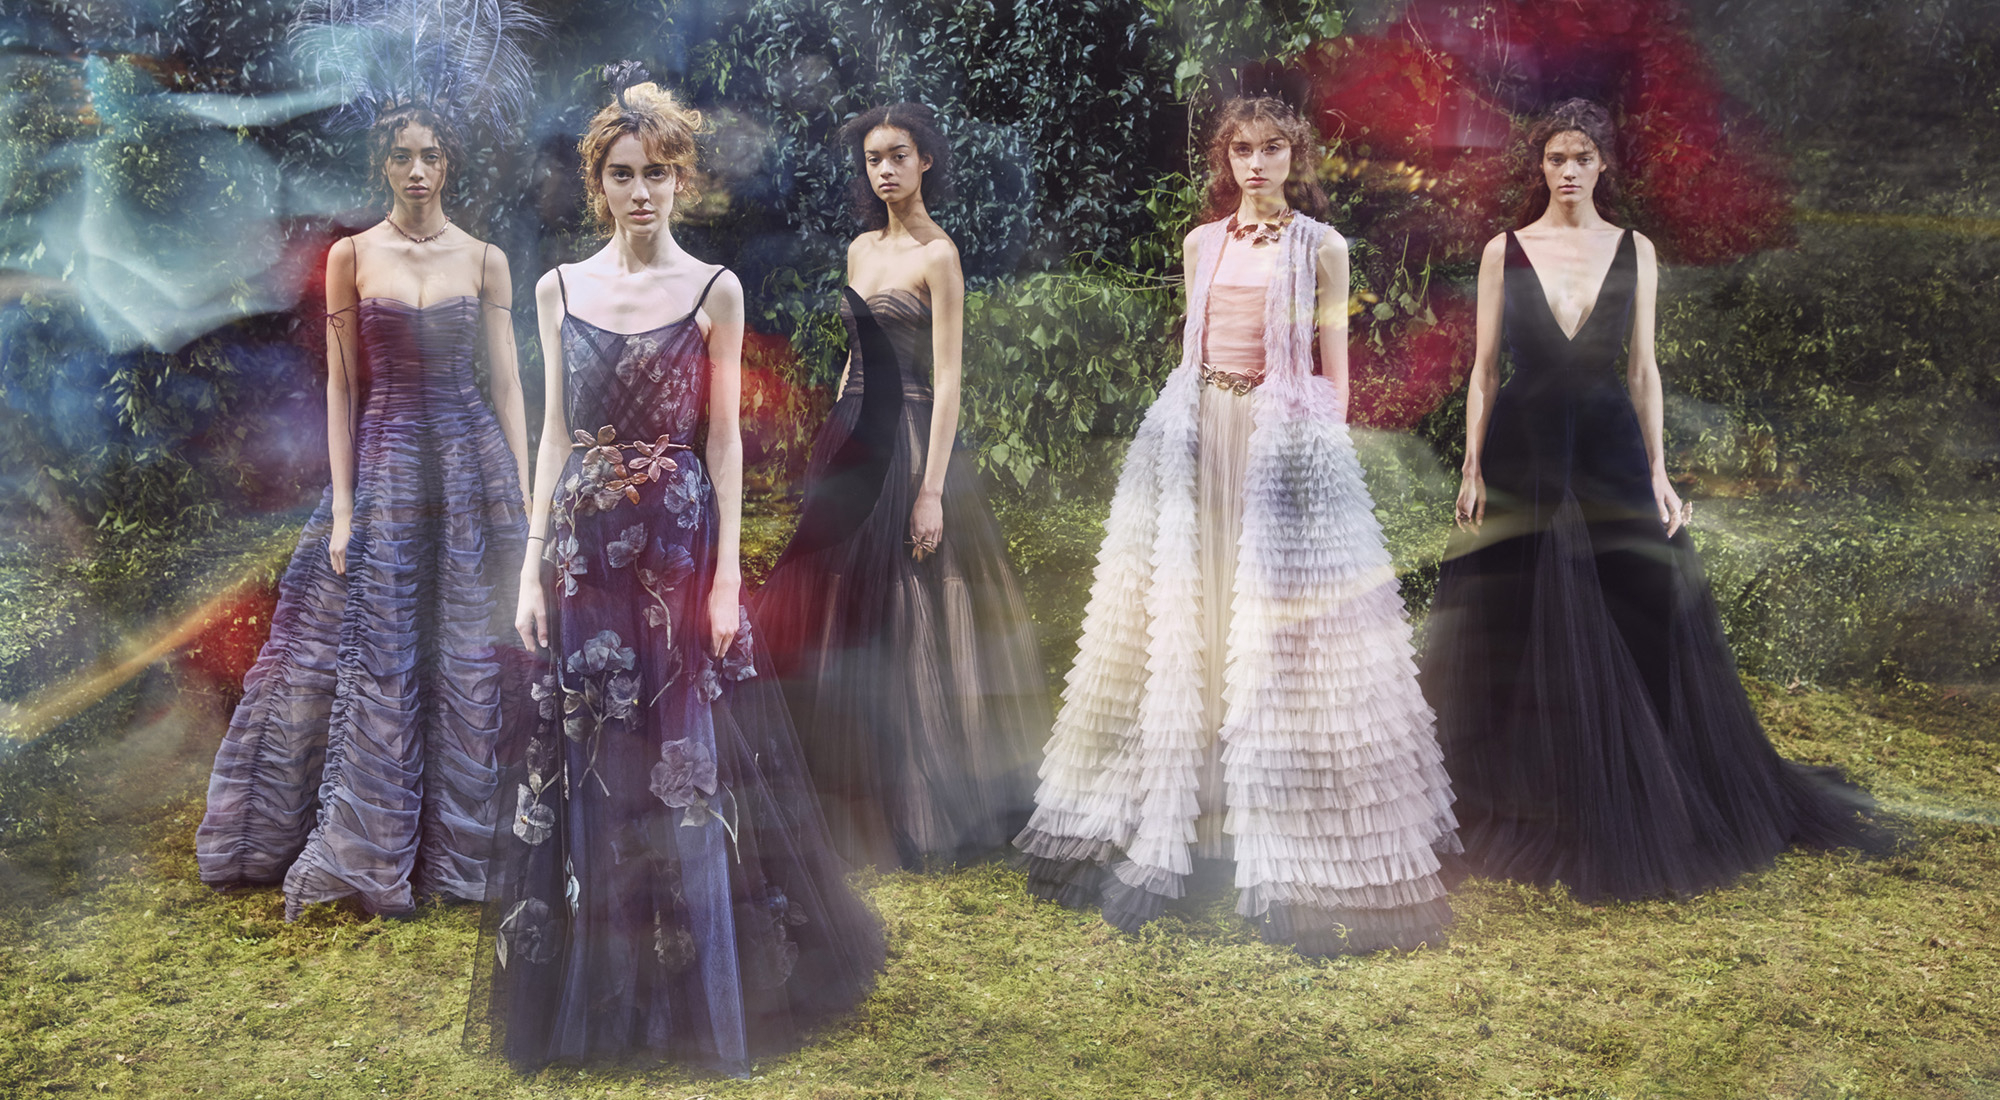 Dior and Maria Grazia Chiuri Celebrate Femininity through Couture   Sothebys